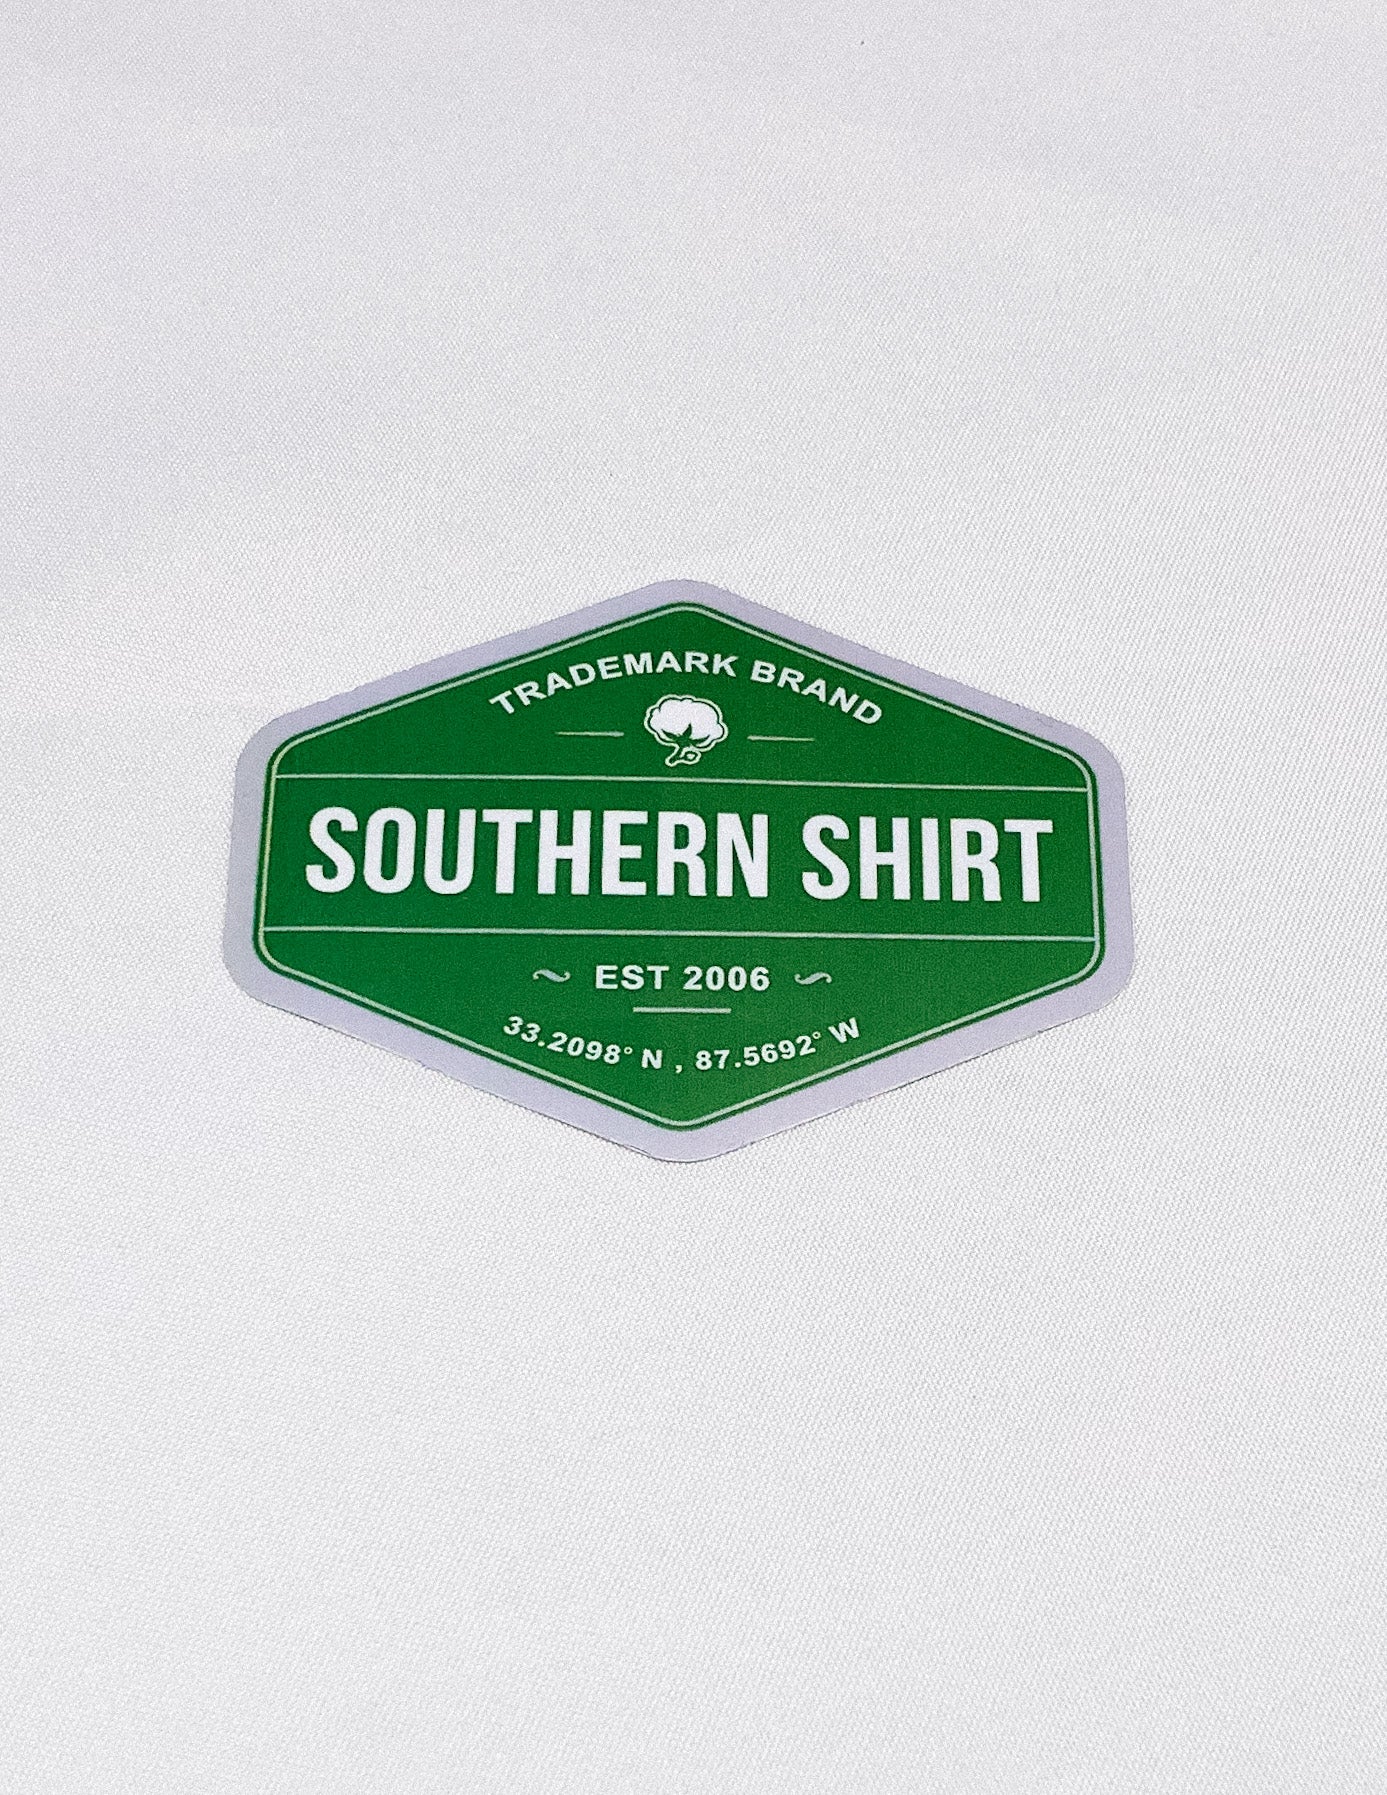 Southern Shirt Trademark Badge Sticker